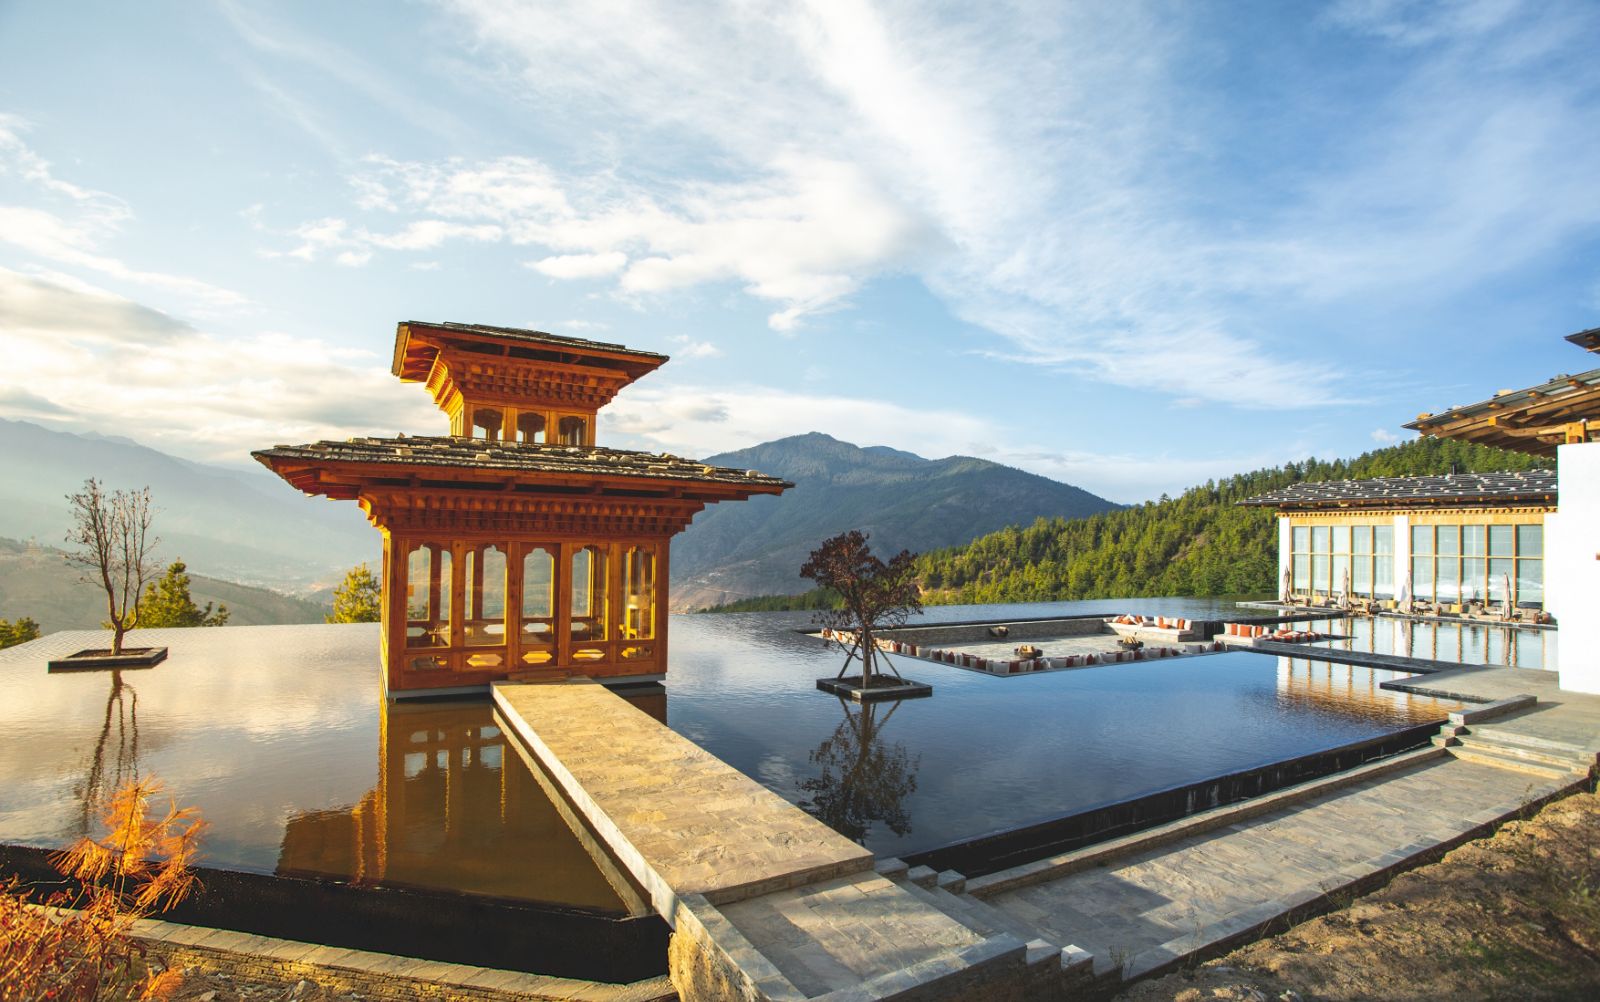 Prayer Pavilion on the Reflecting Pool at luxury hotel Six Senses Thimpu Lodge in Bhutan